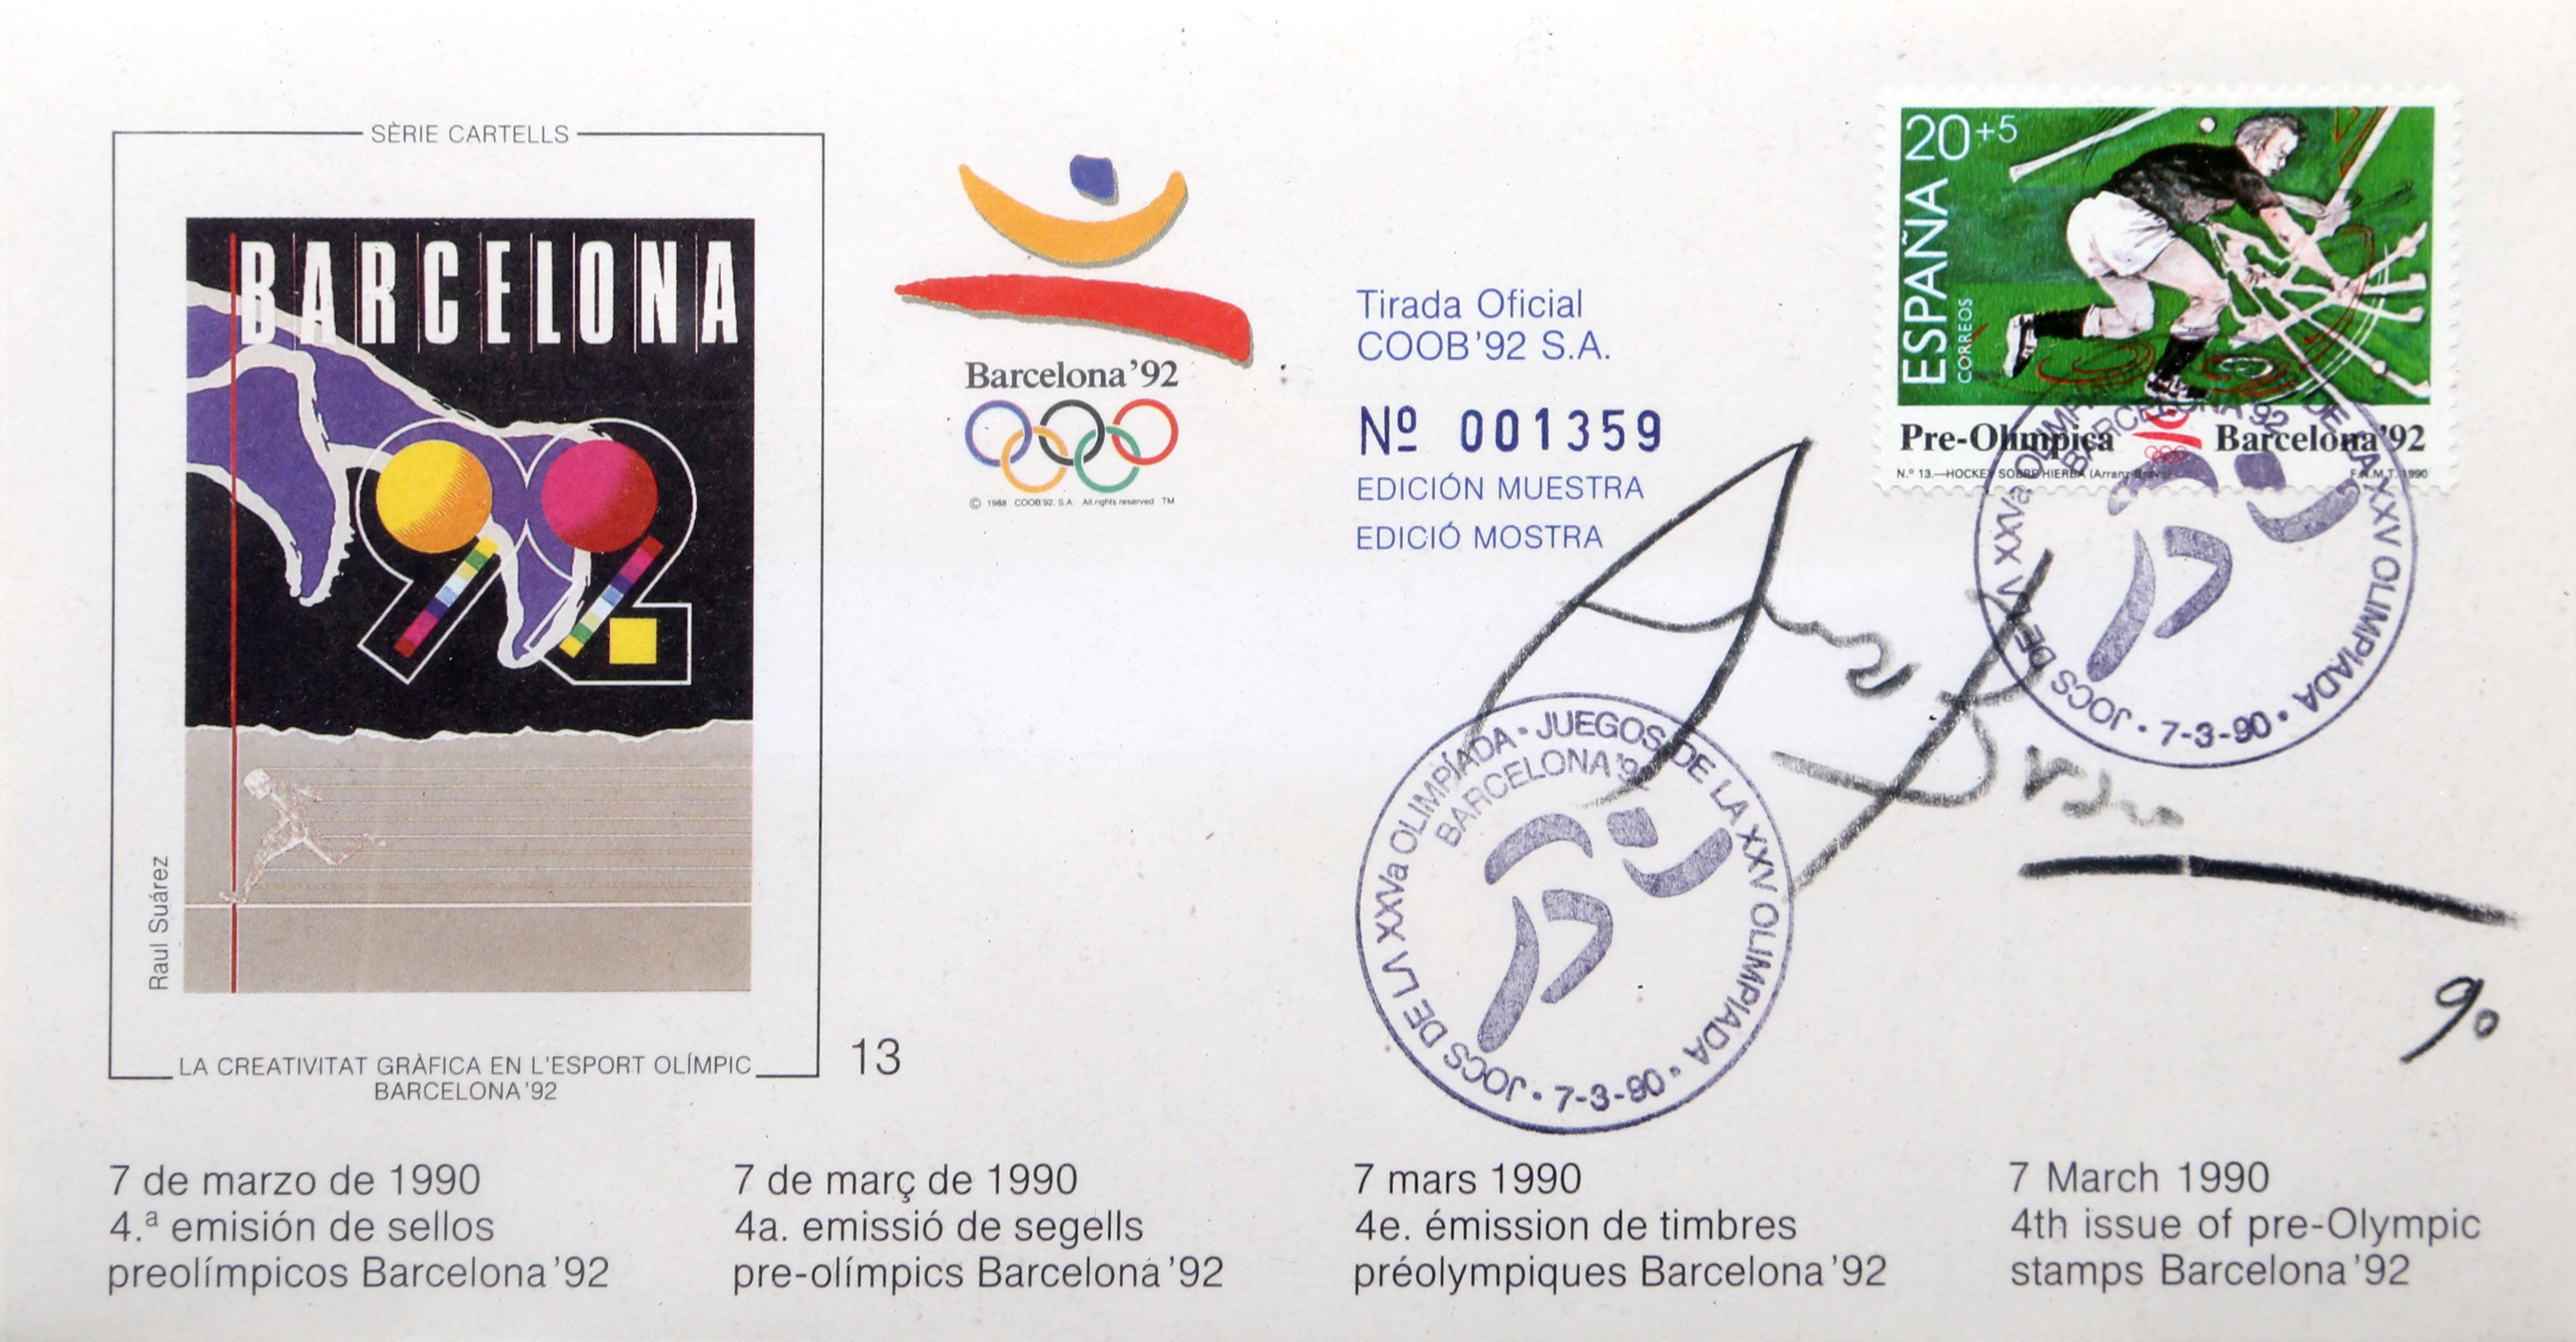 Barcelona Pre-Olympic Stamp 1, Mixed Media on Paper by Eduardo Arranz-Bravo For Sale 1